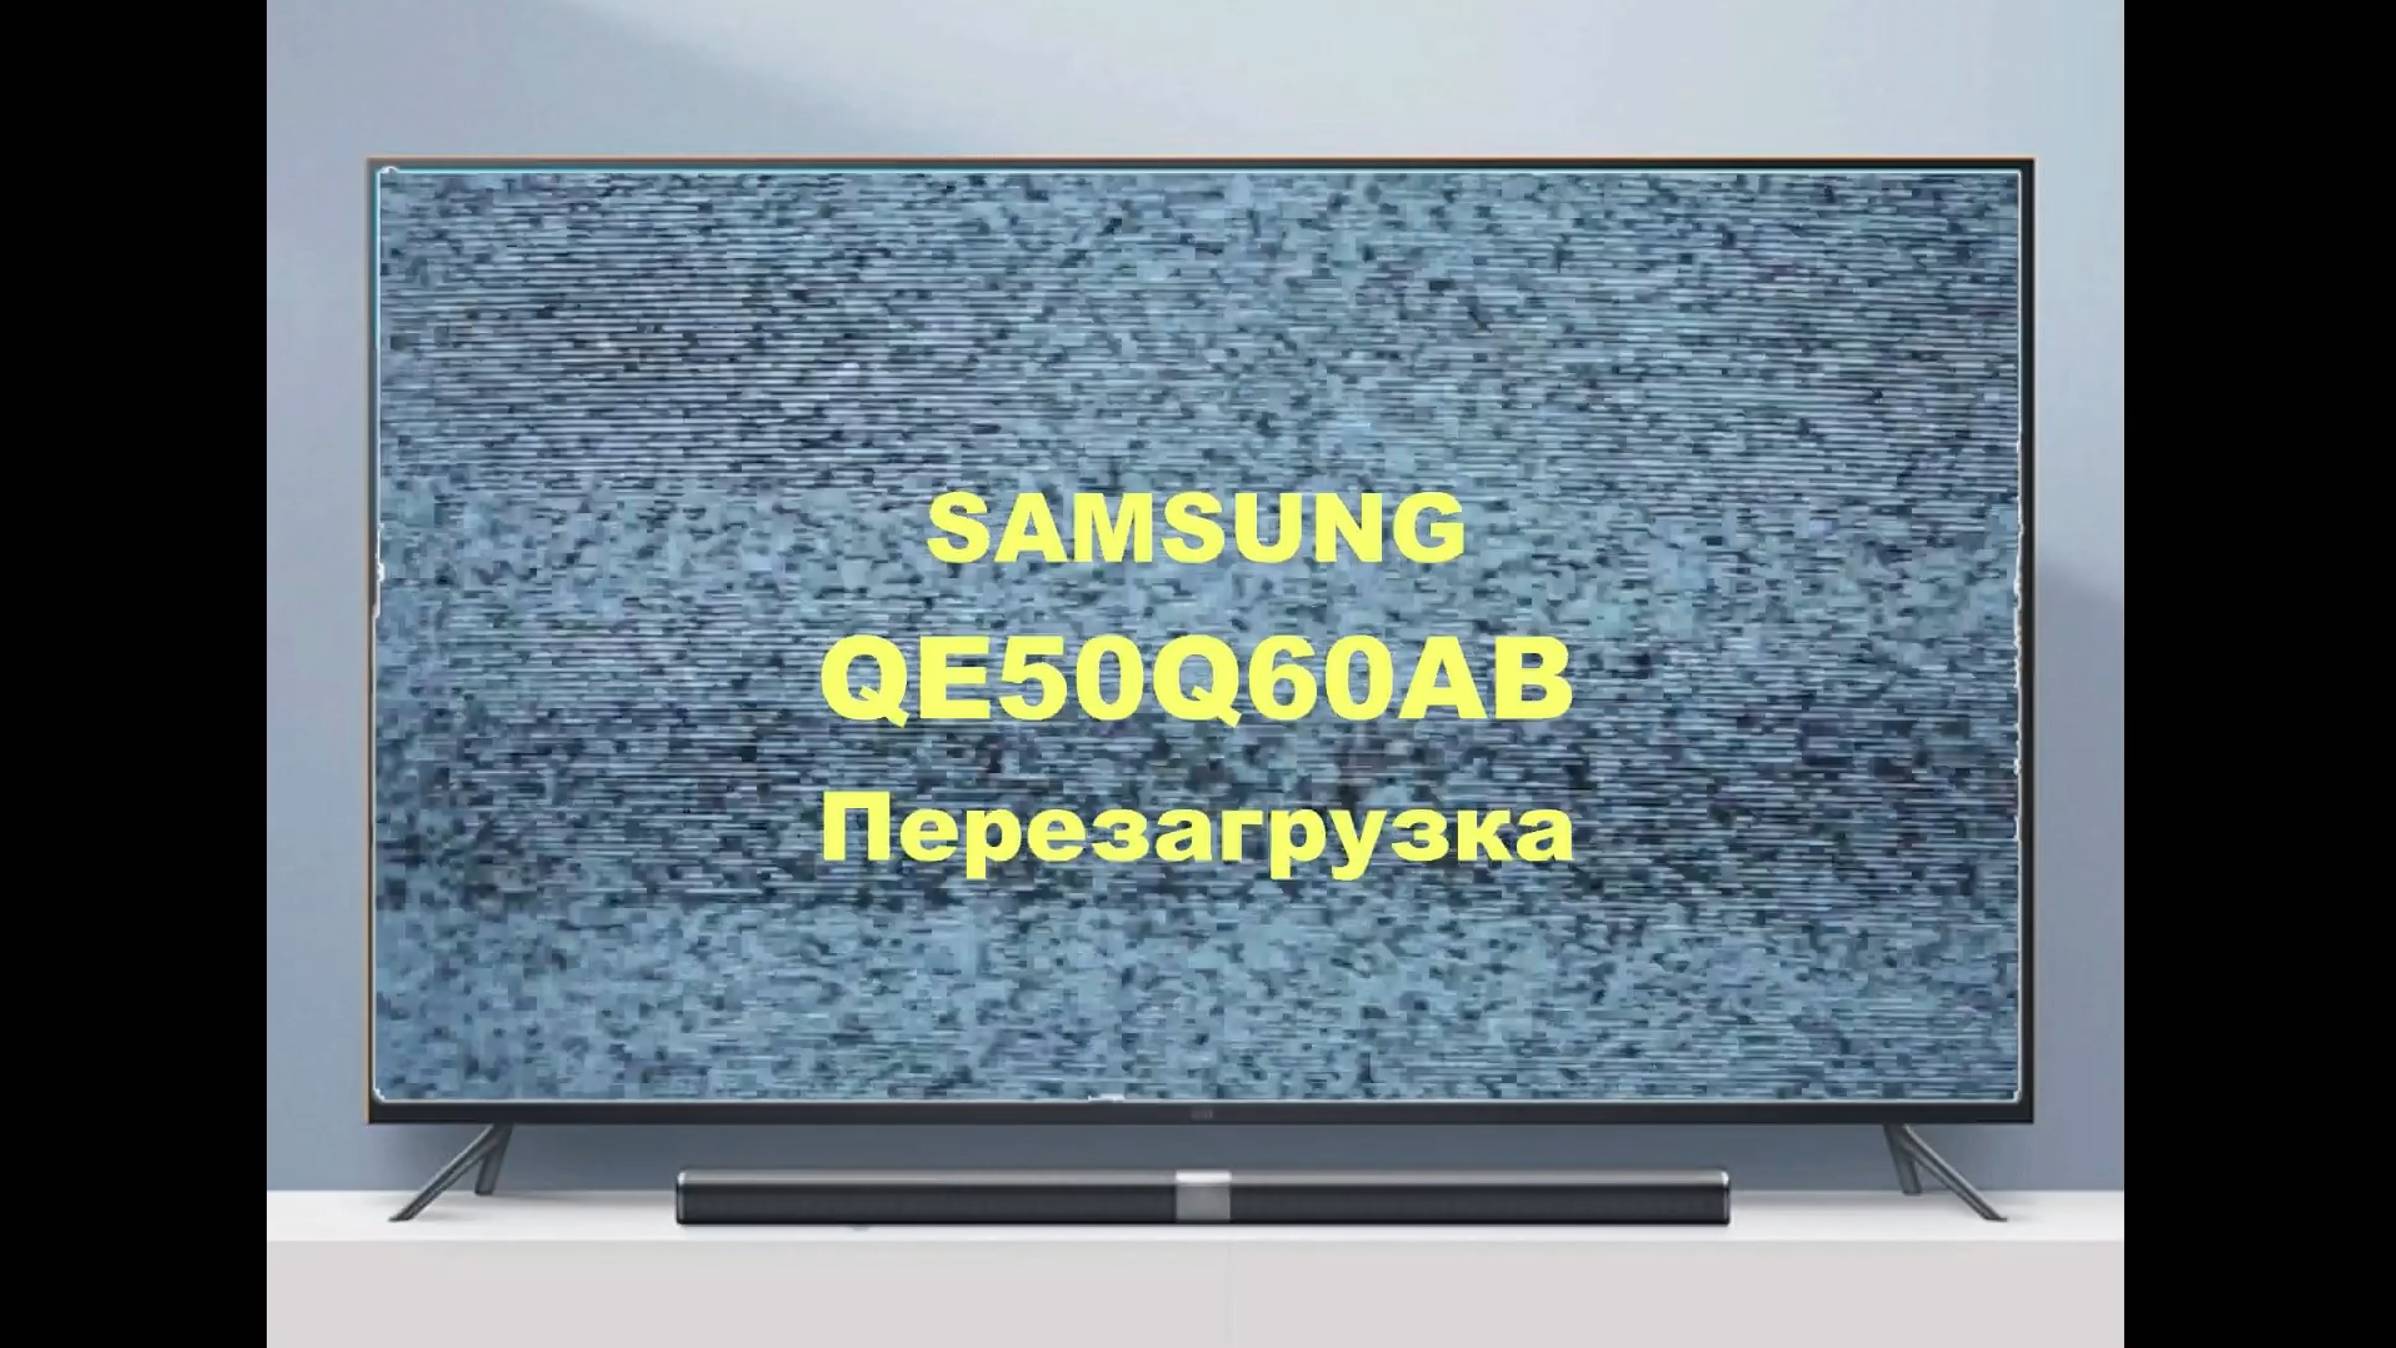 Ремонт телевизора Samsung QE50Q60AB. 2 мырга.